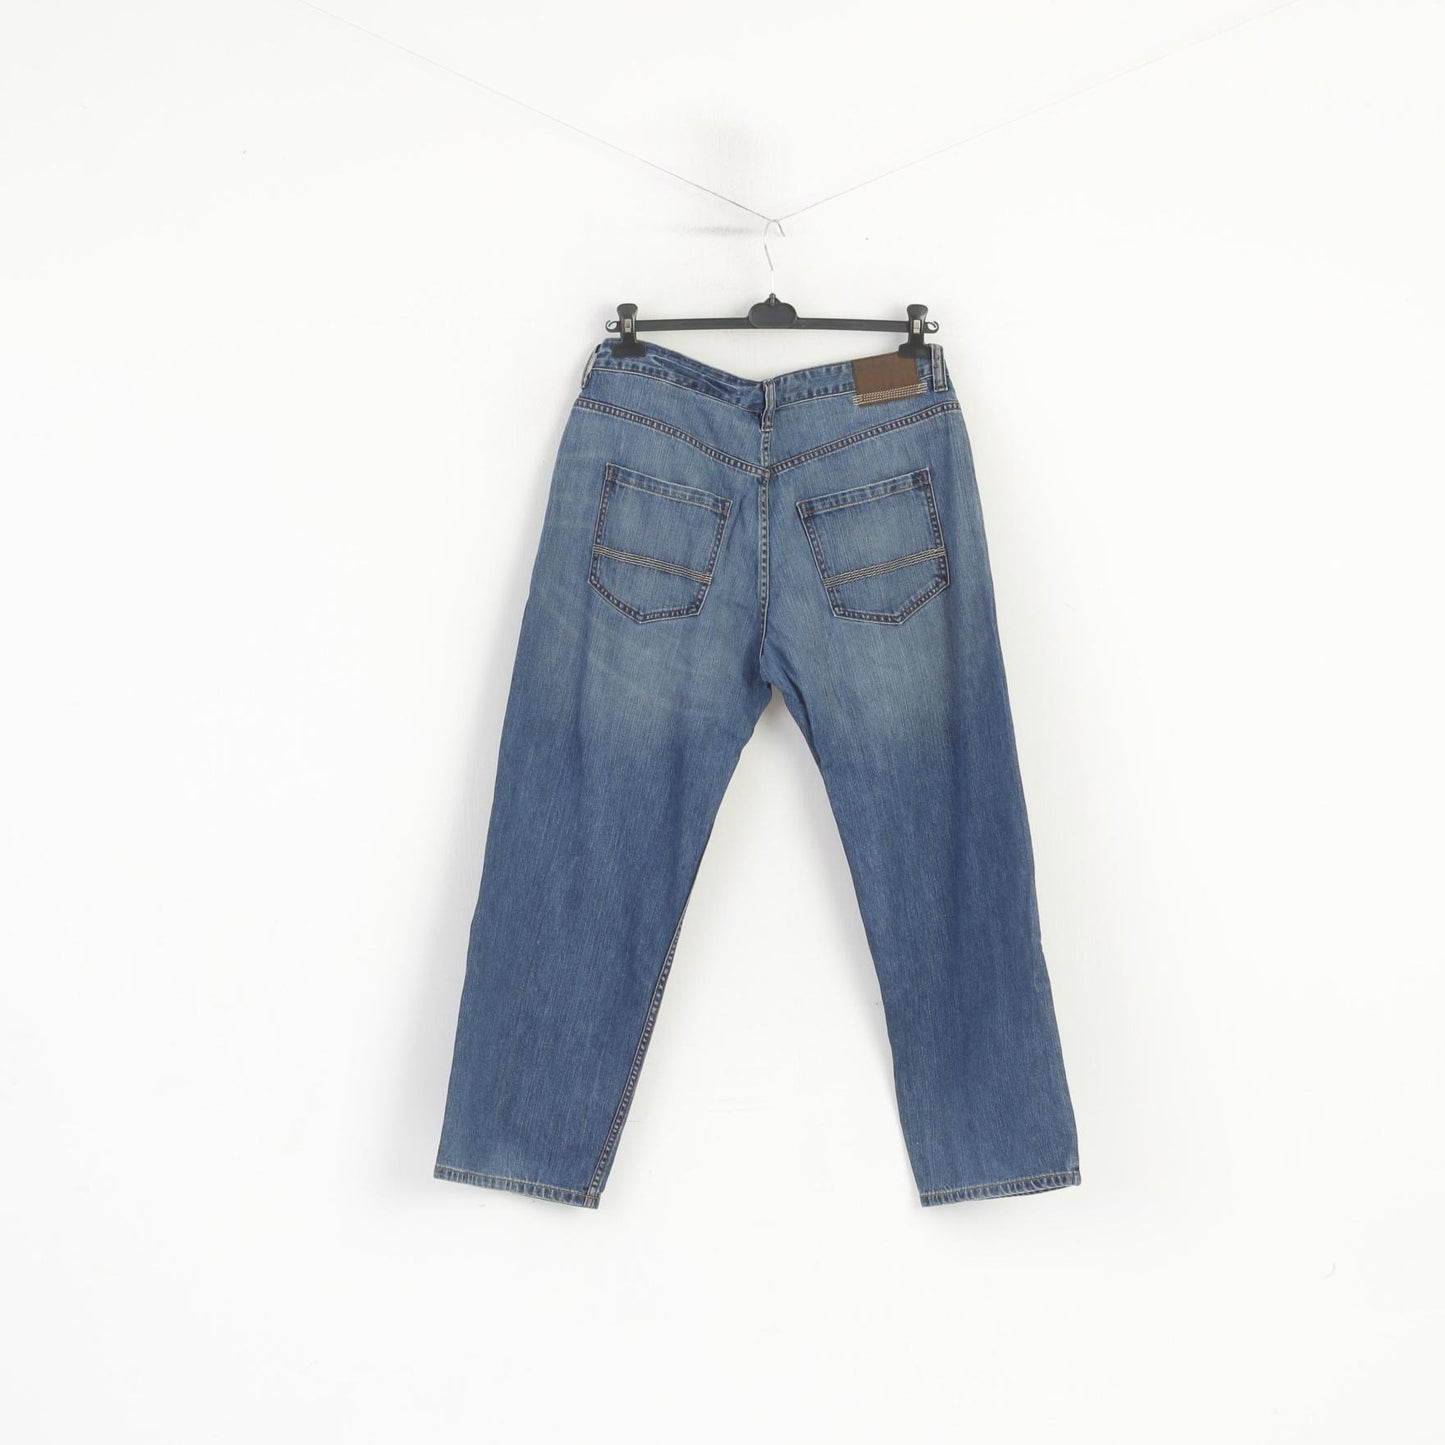 Timberland Men 36 Jeans Trousers Navy Denim Cotton Porterdale Vintage Straight